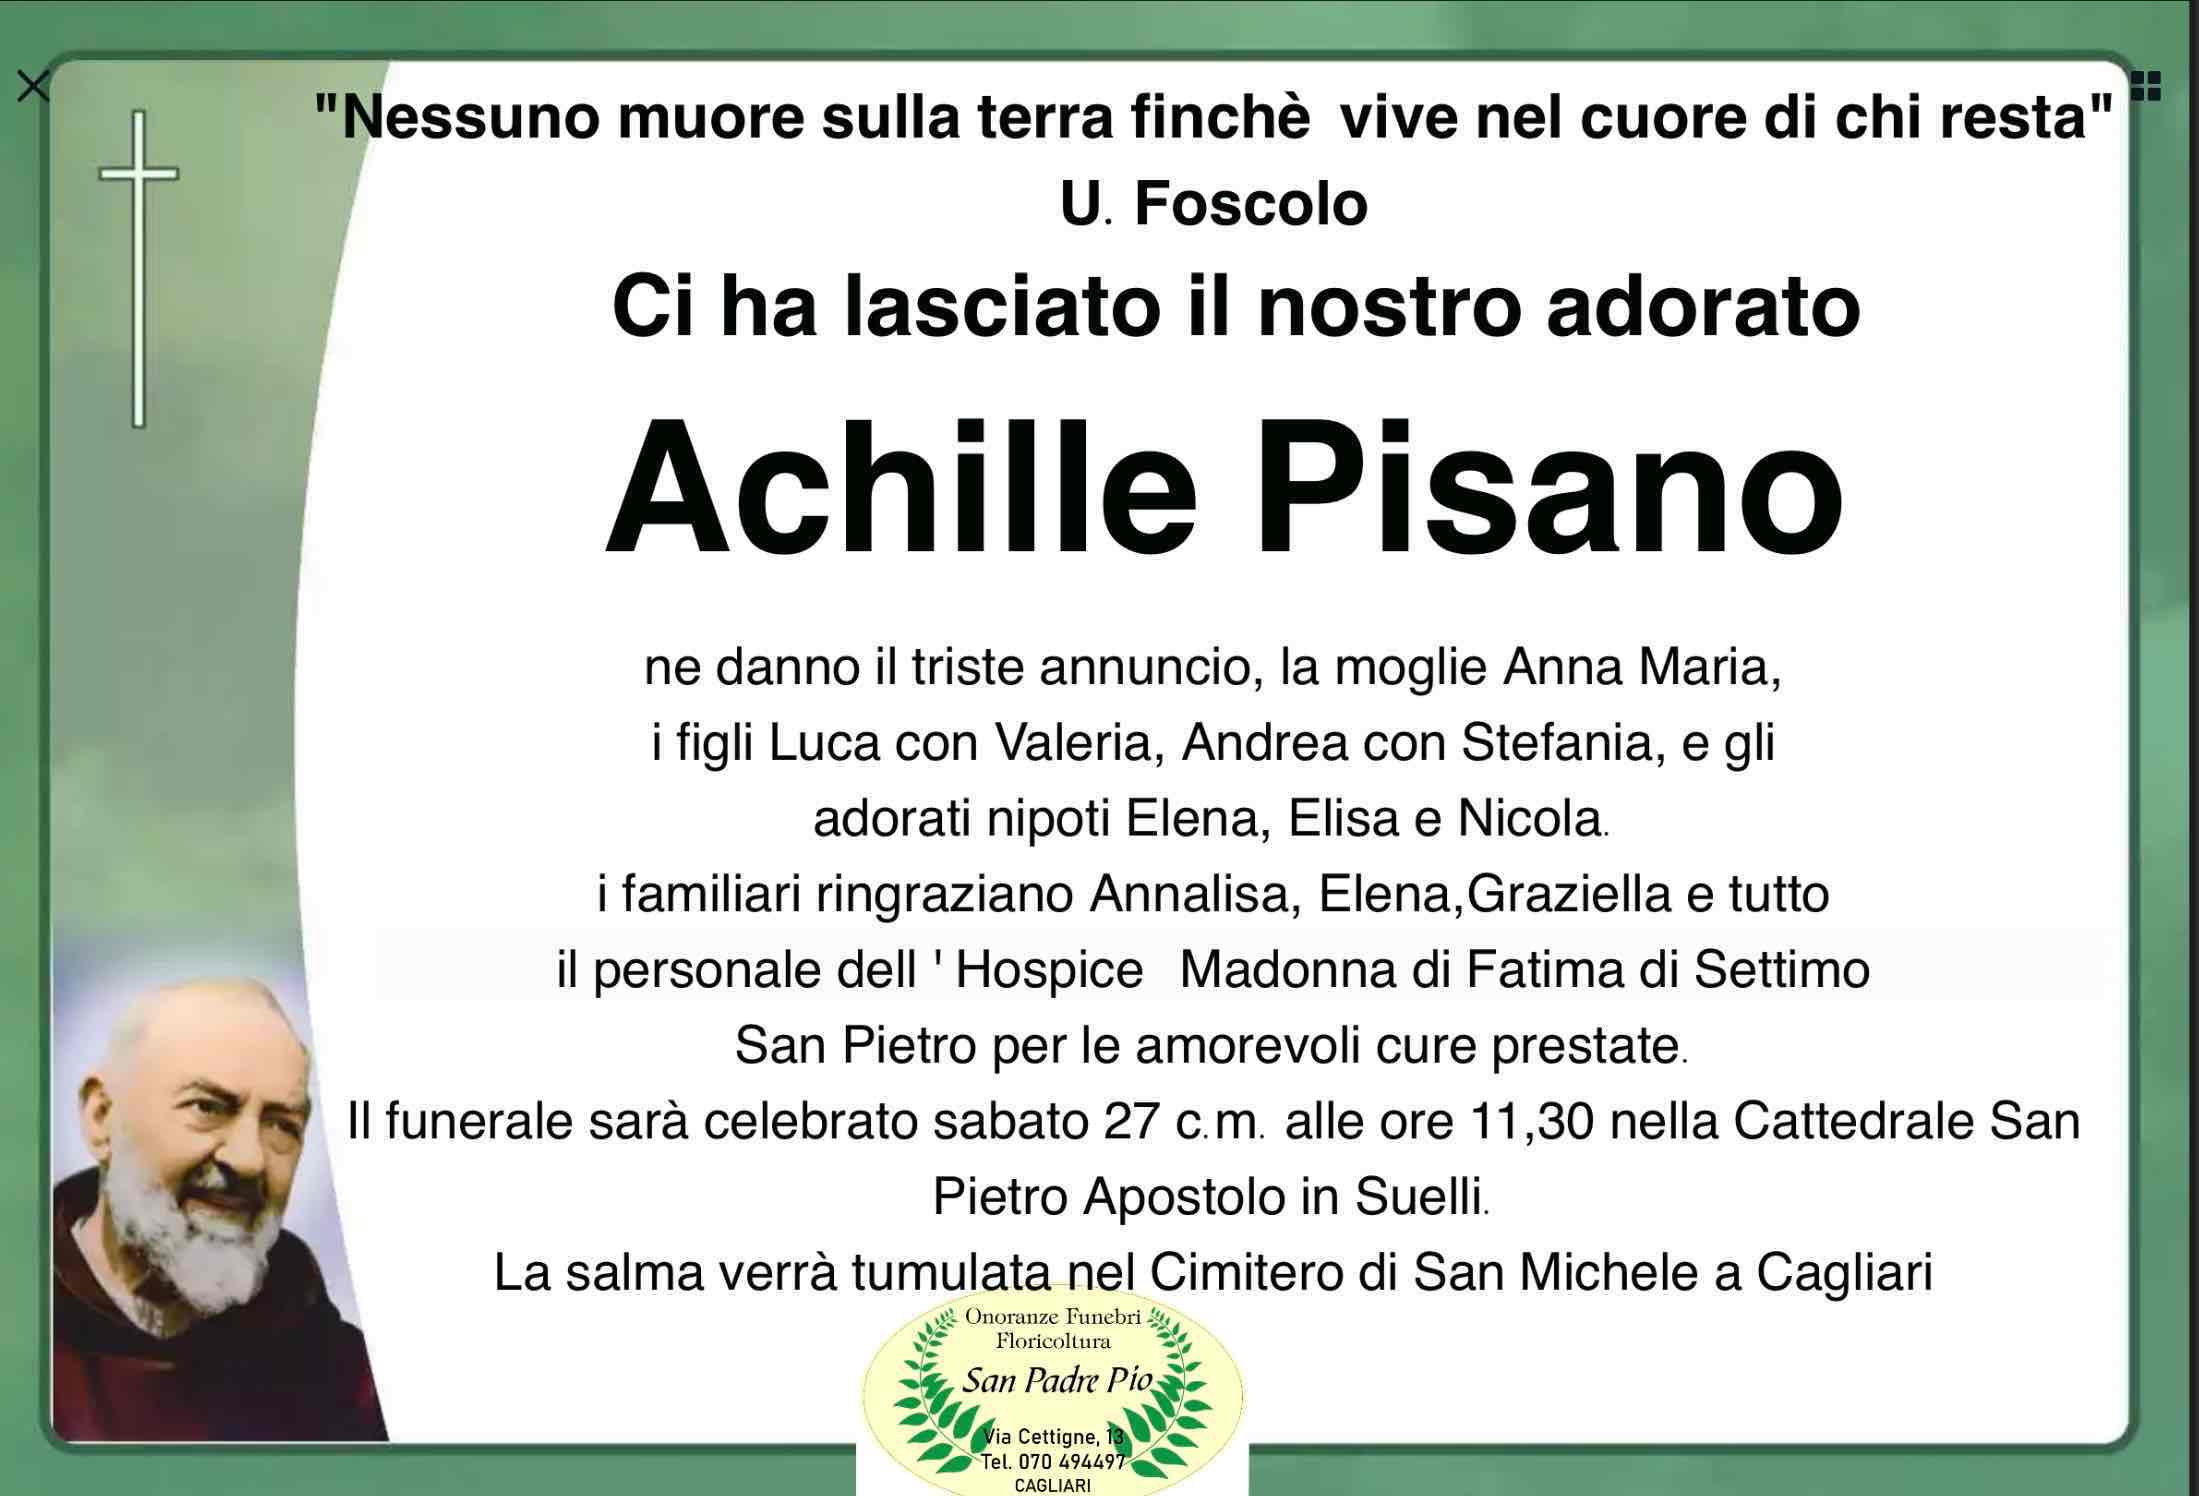 Achille Pisano